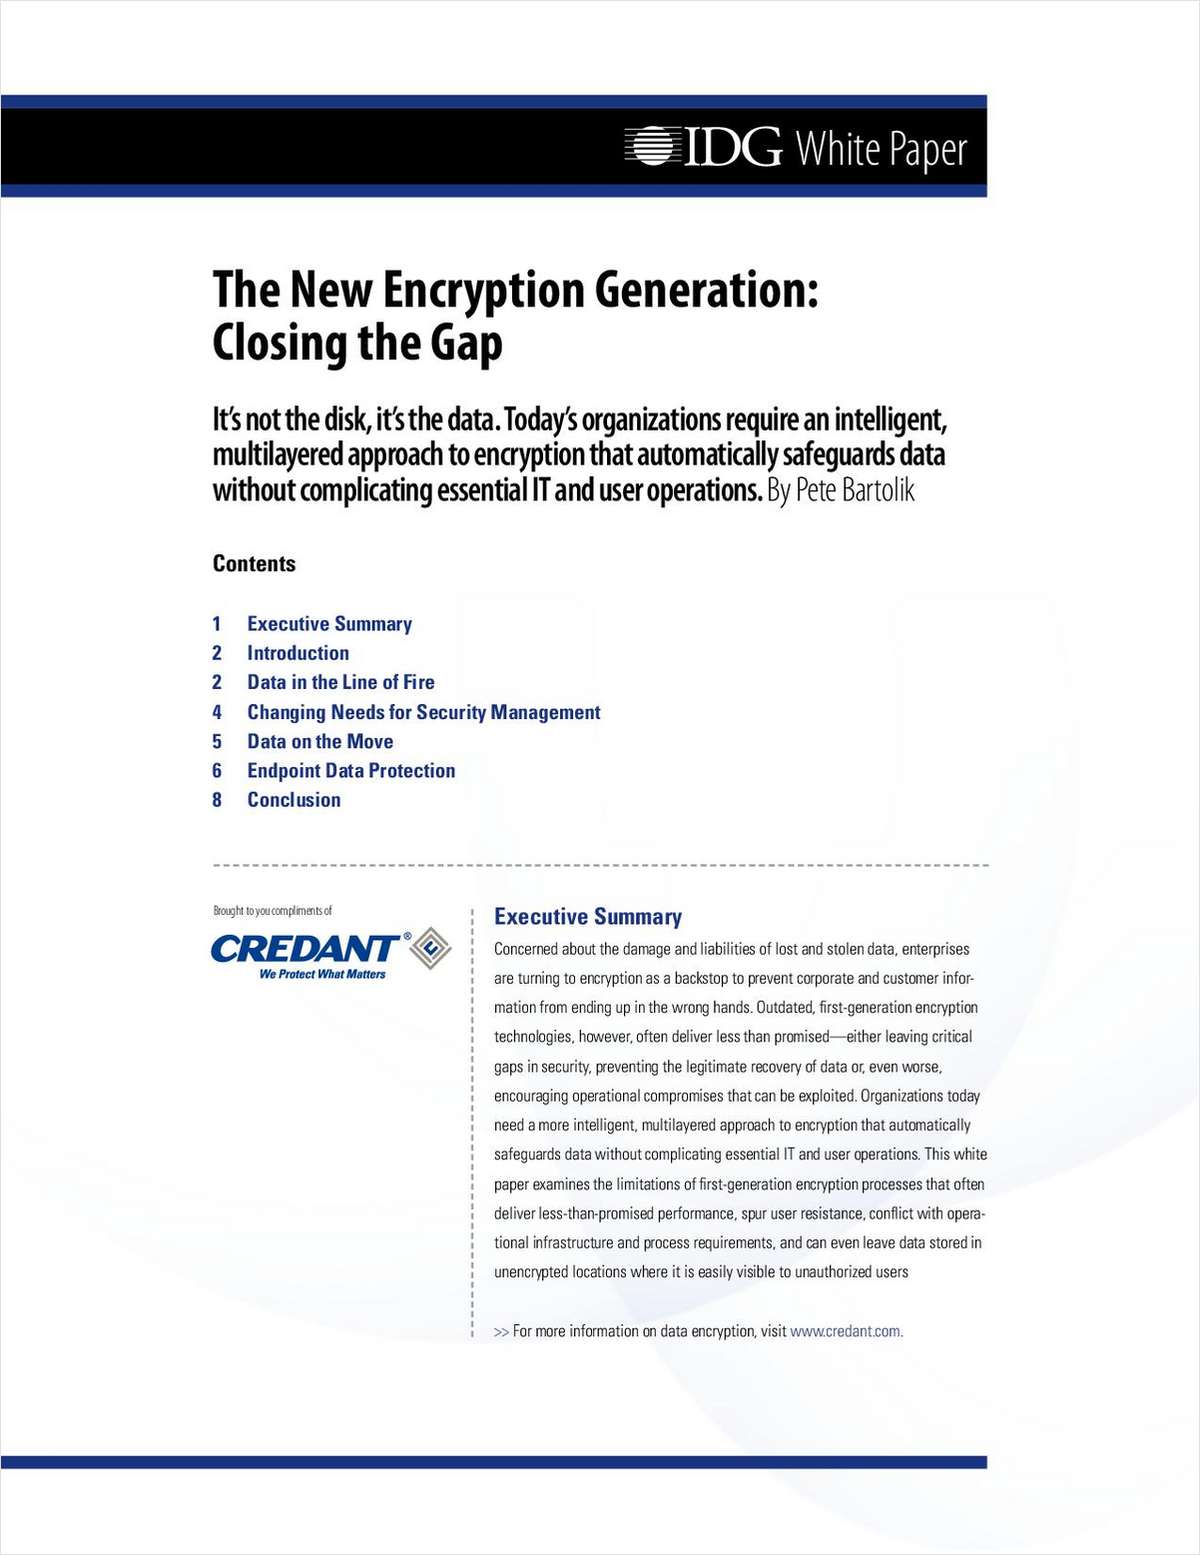 The New Encryption Generation: Closing the Gap